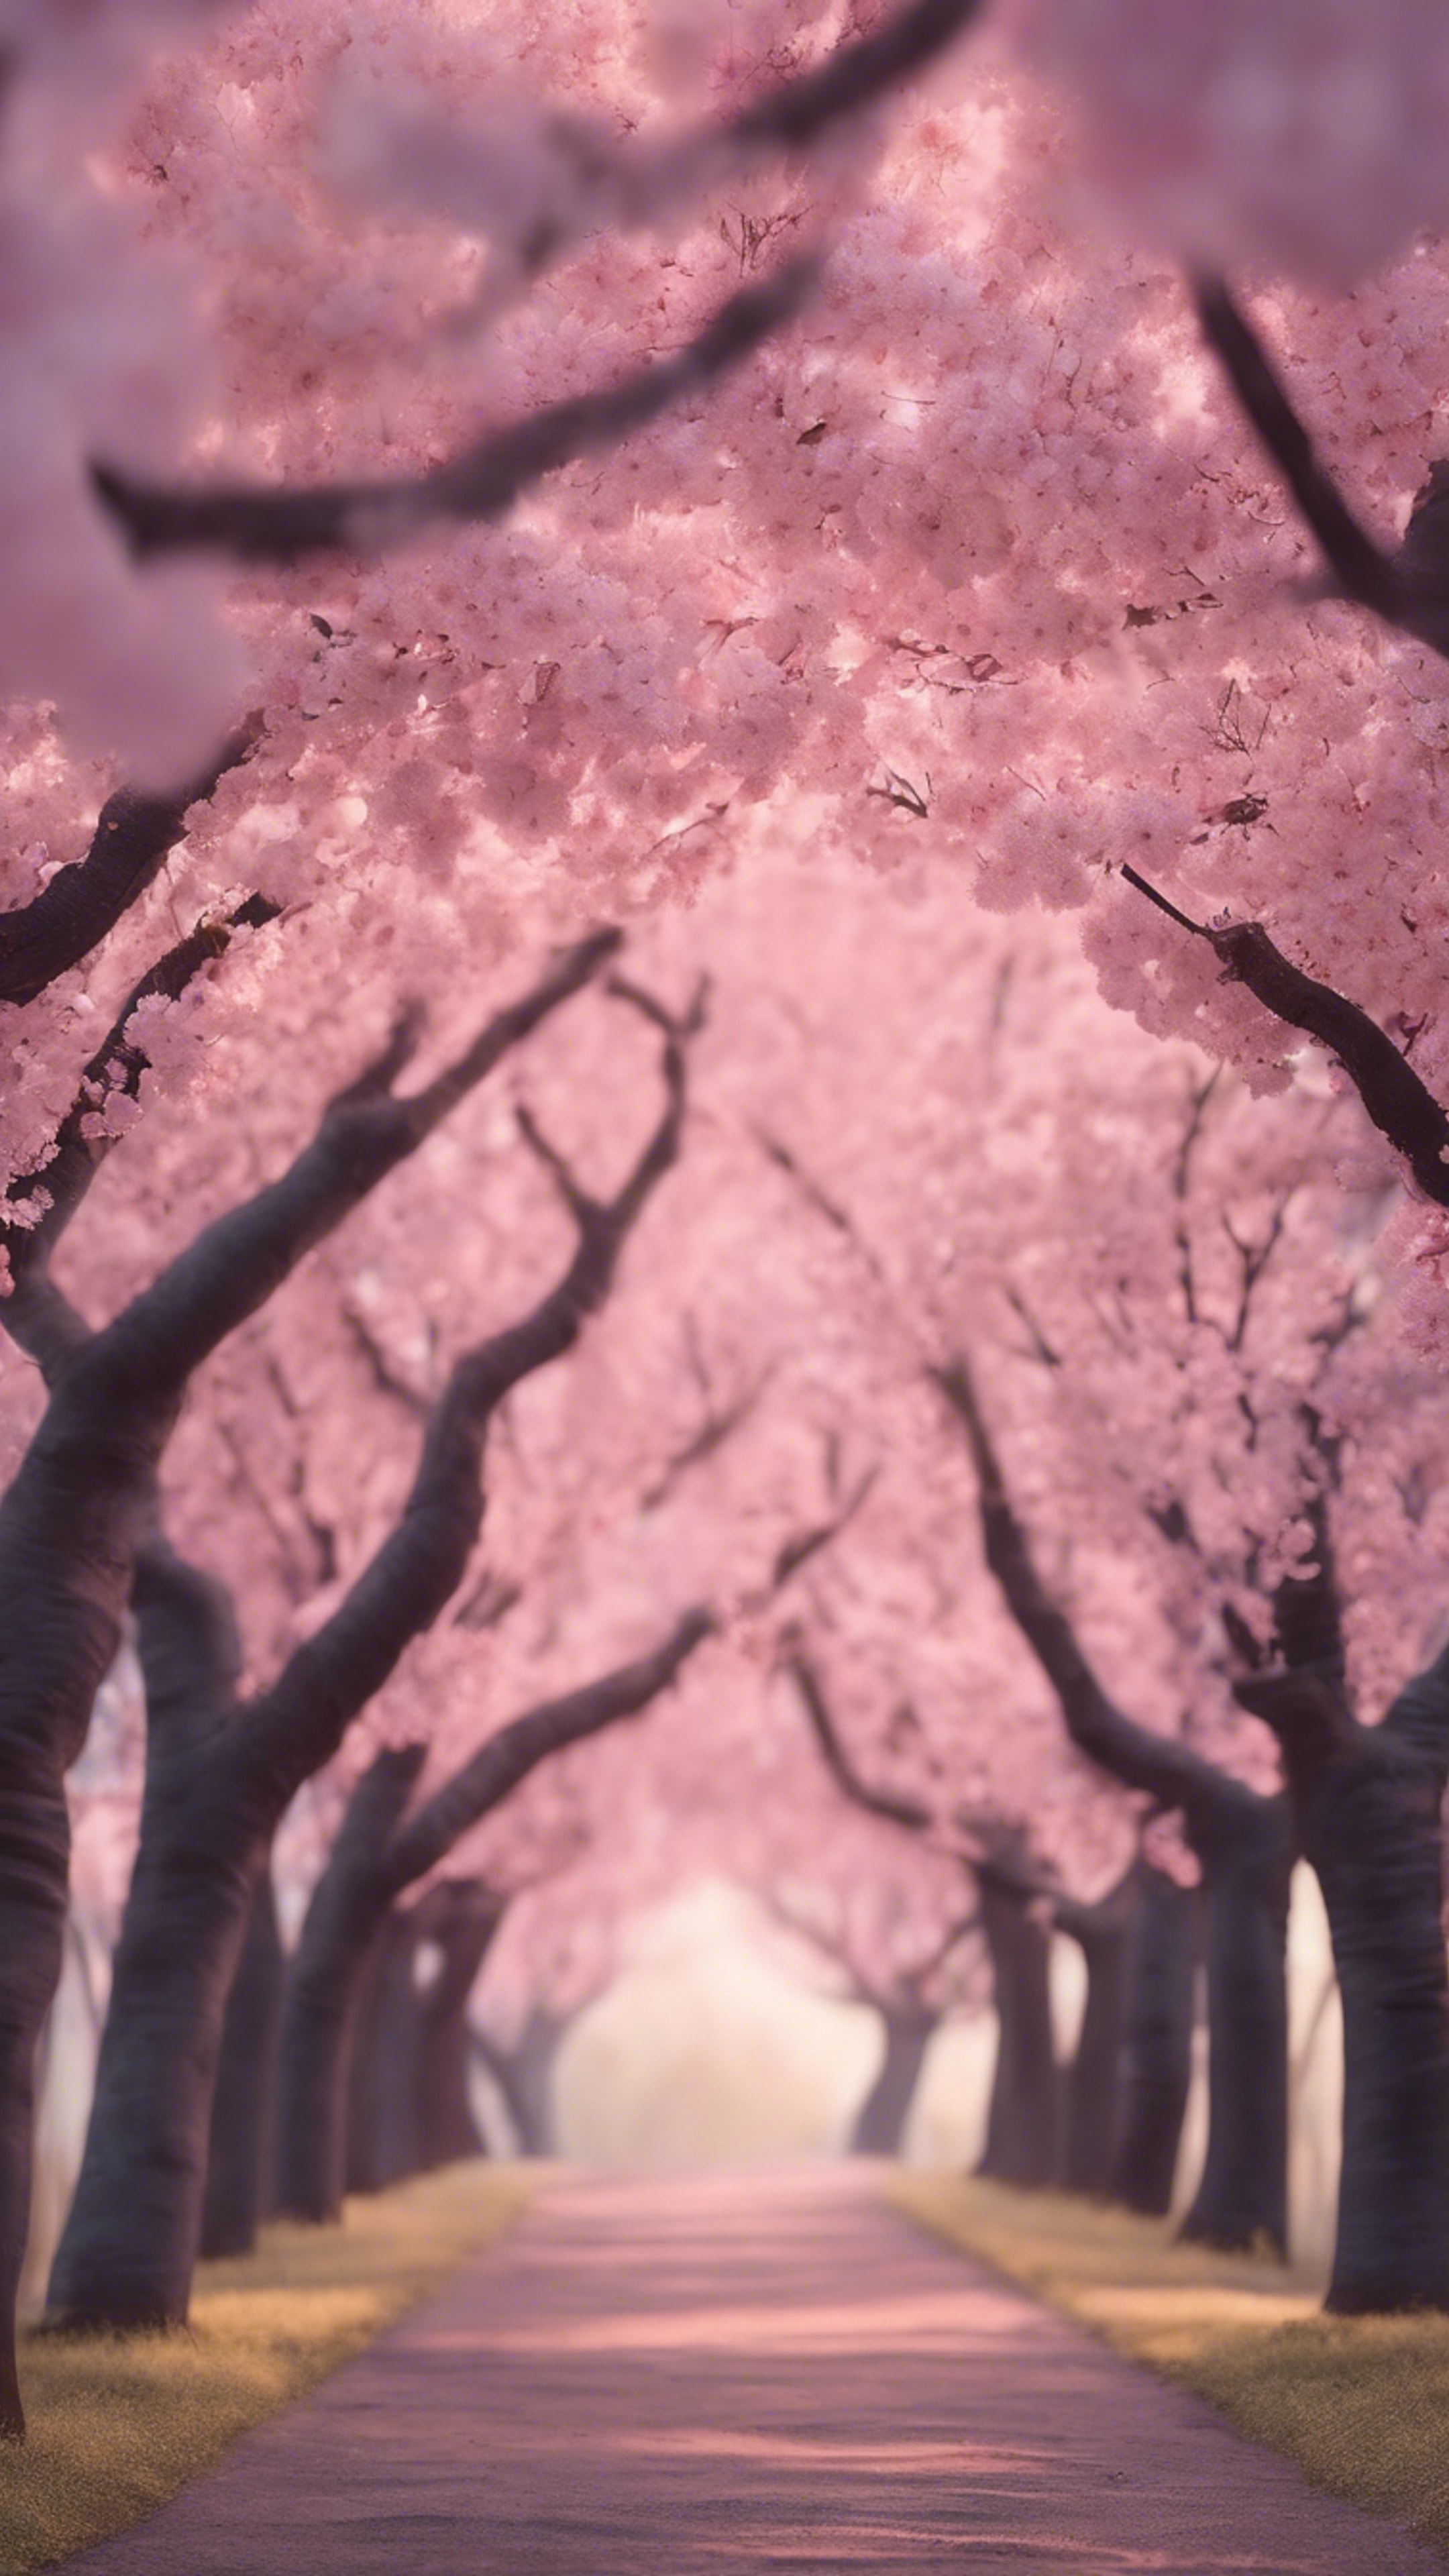 A magical dream landscape of a soft pink cherry blossom avenue under a romantic dusky sky. Behang[c79f6cc44b0c40cf871b]